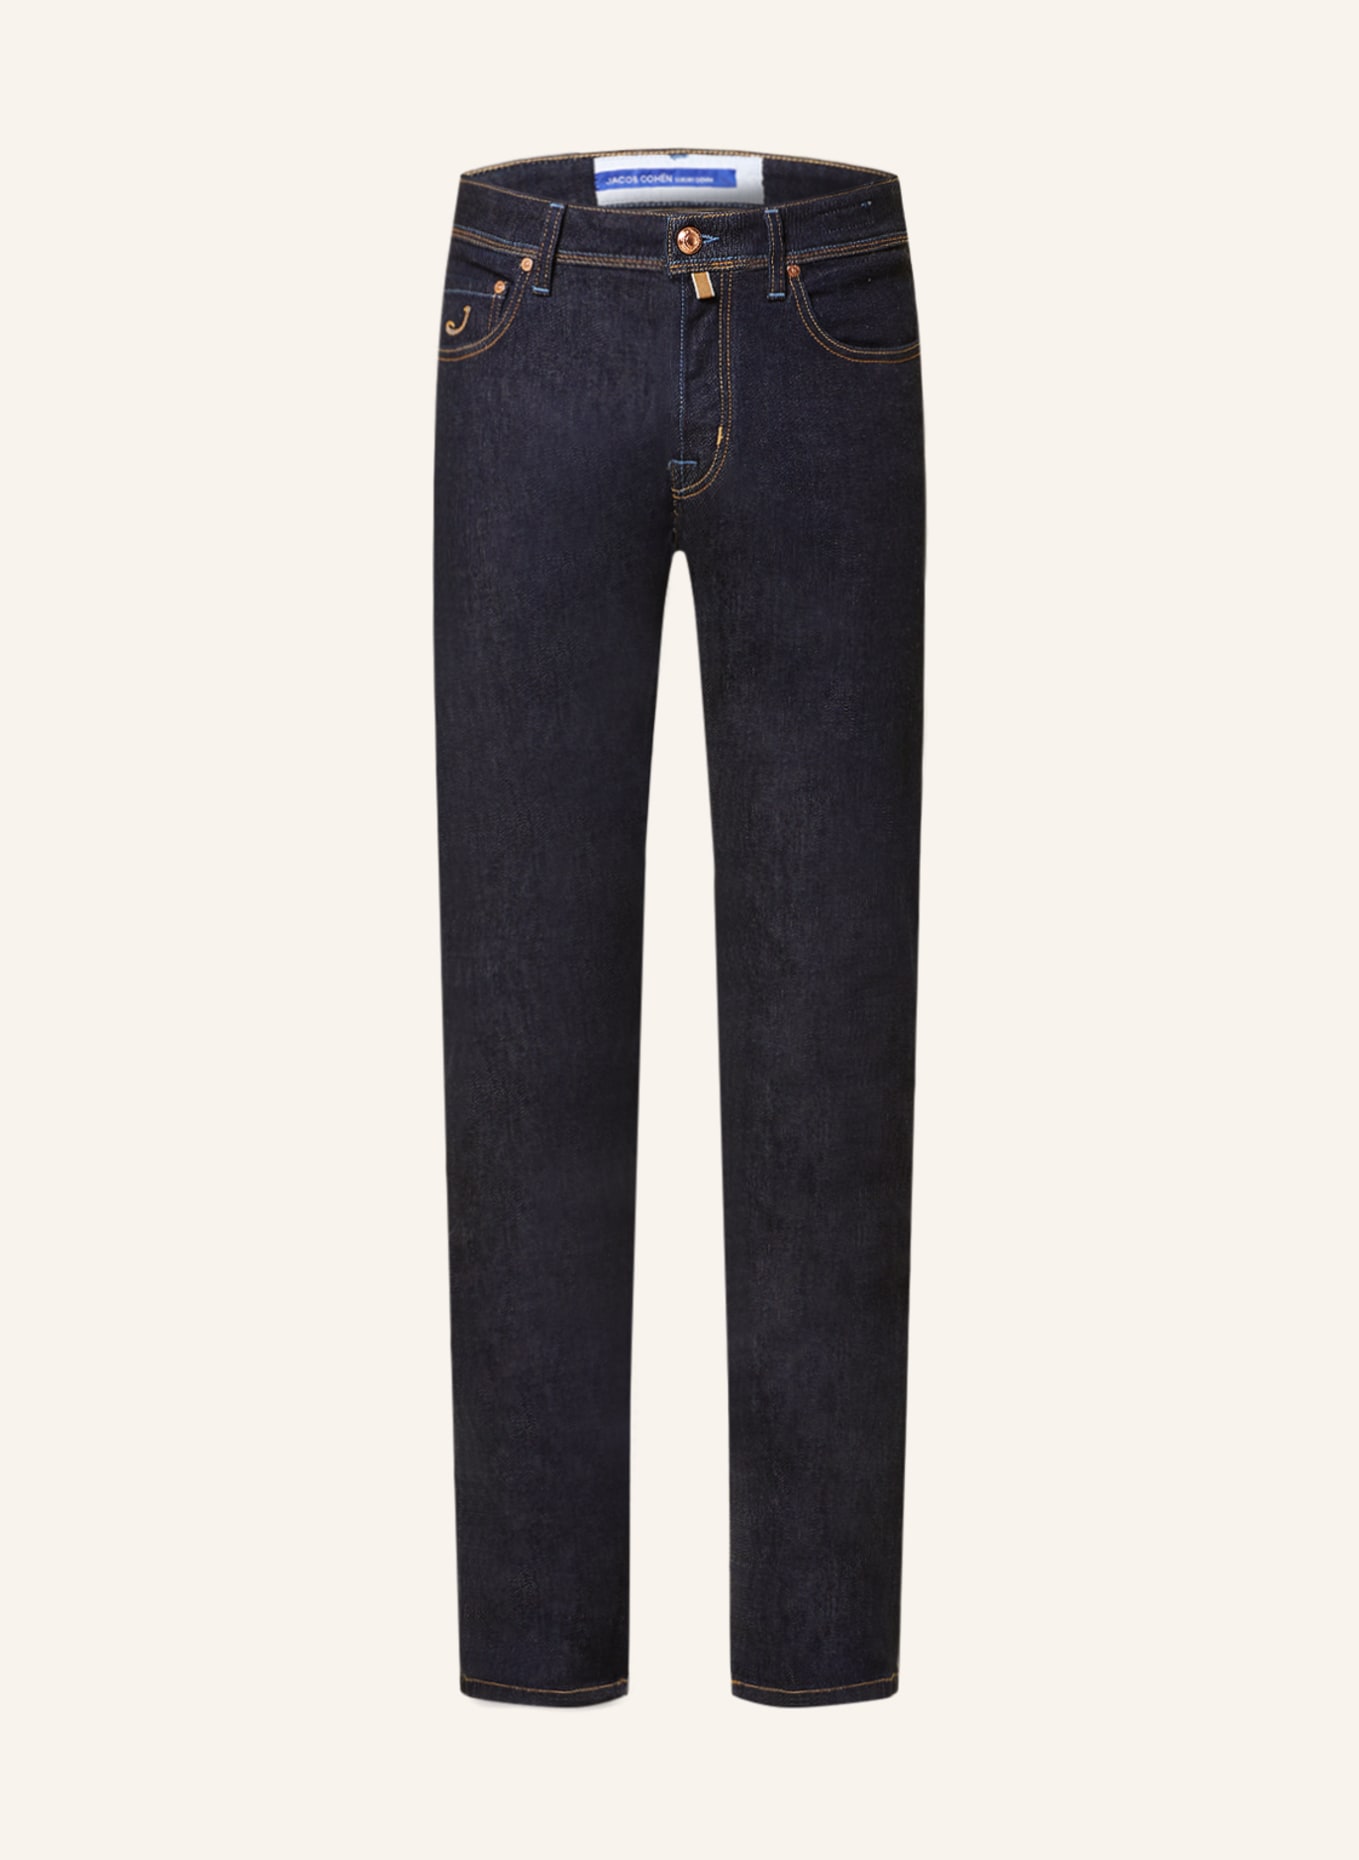 JACOB COHEN Destroyed Jeans BARD Slim Fit, Farbe: 001D Dark Blue (Bild 1)